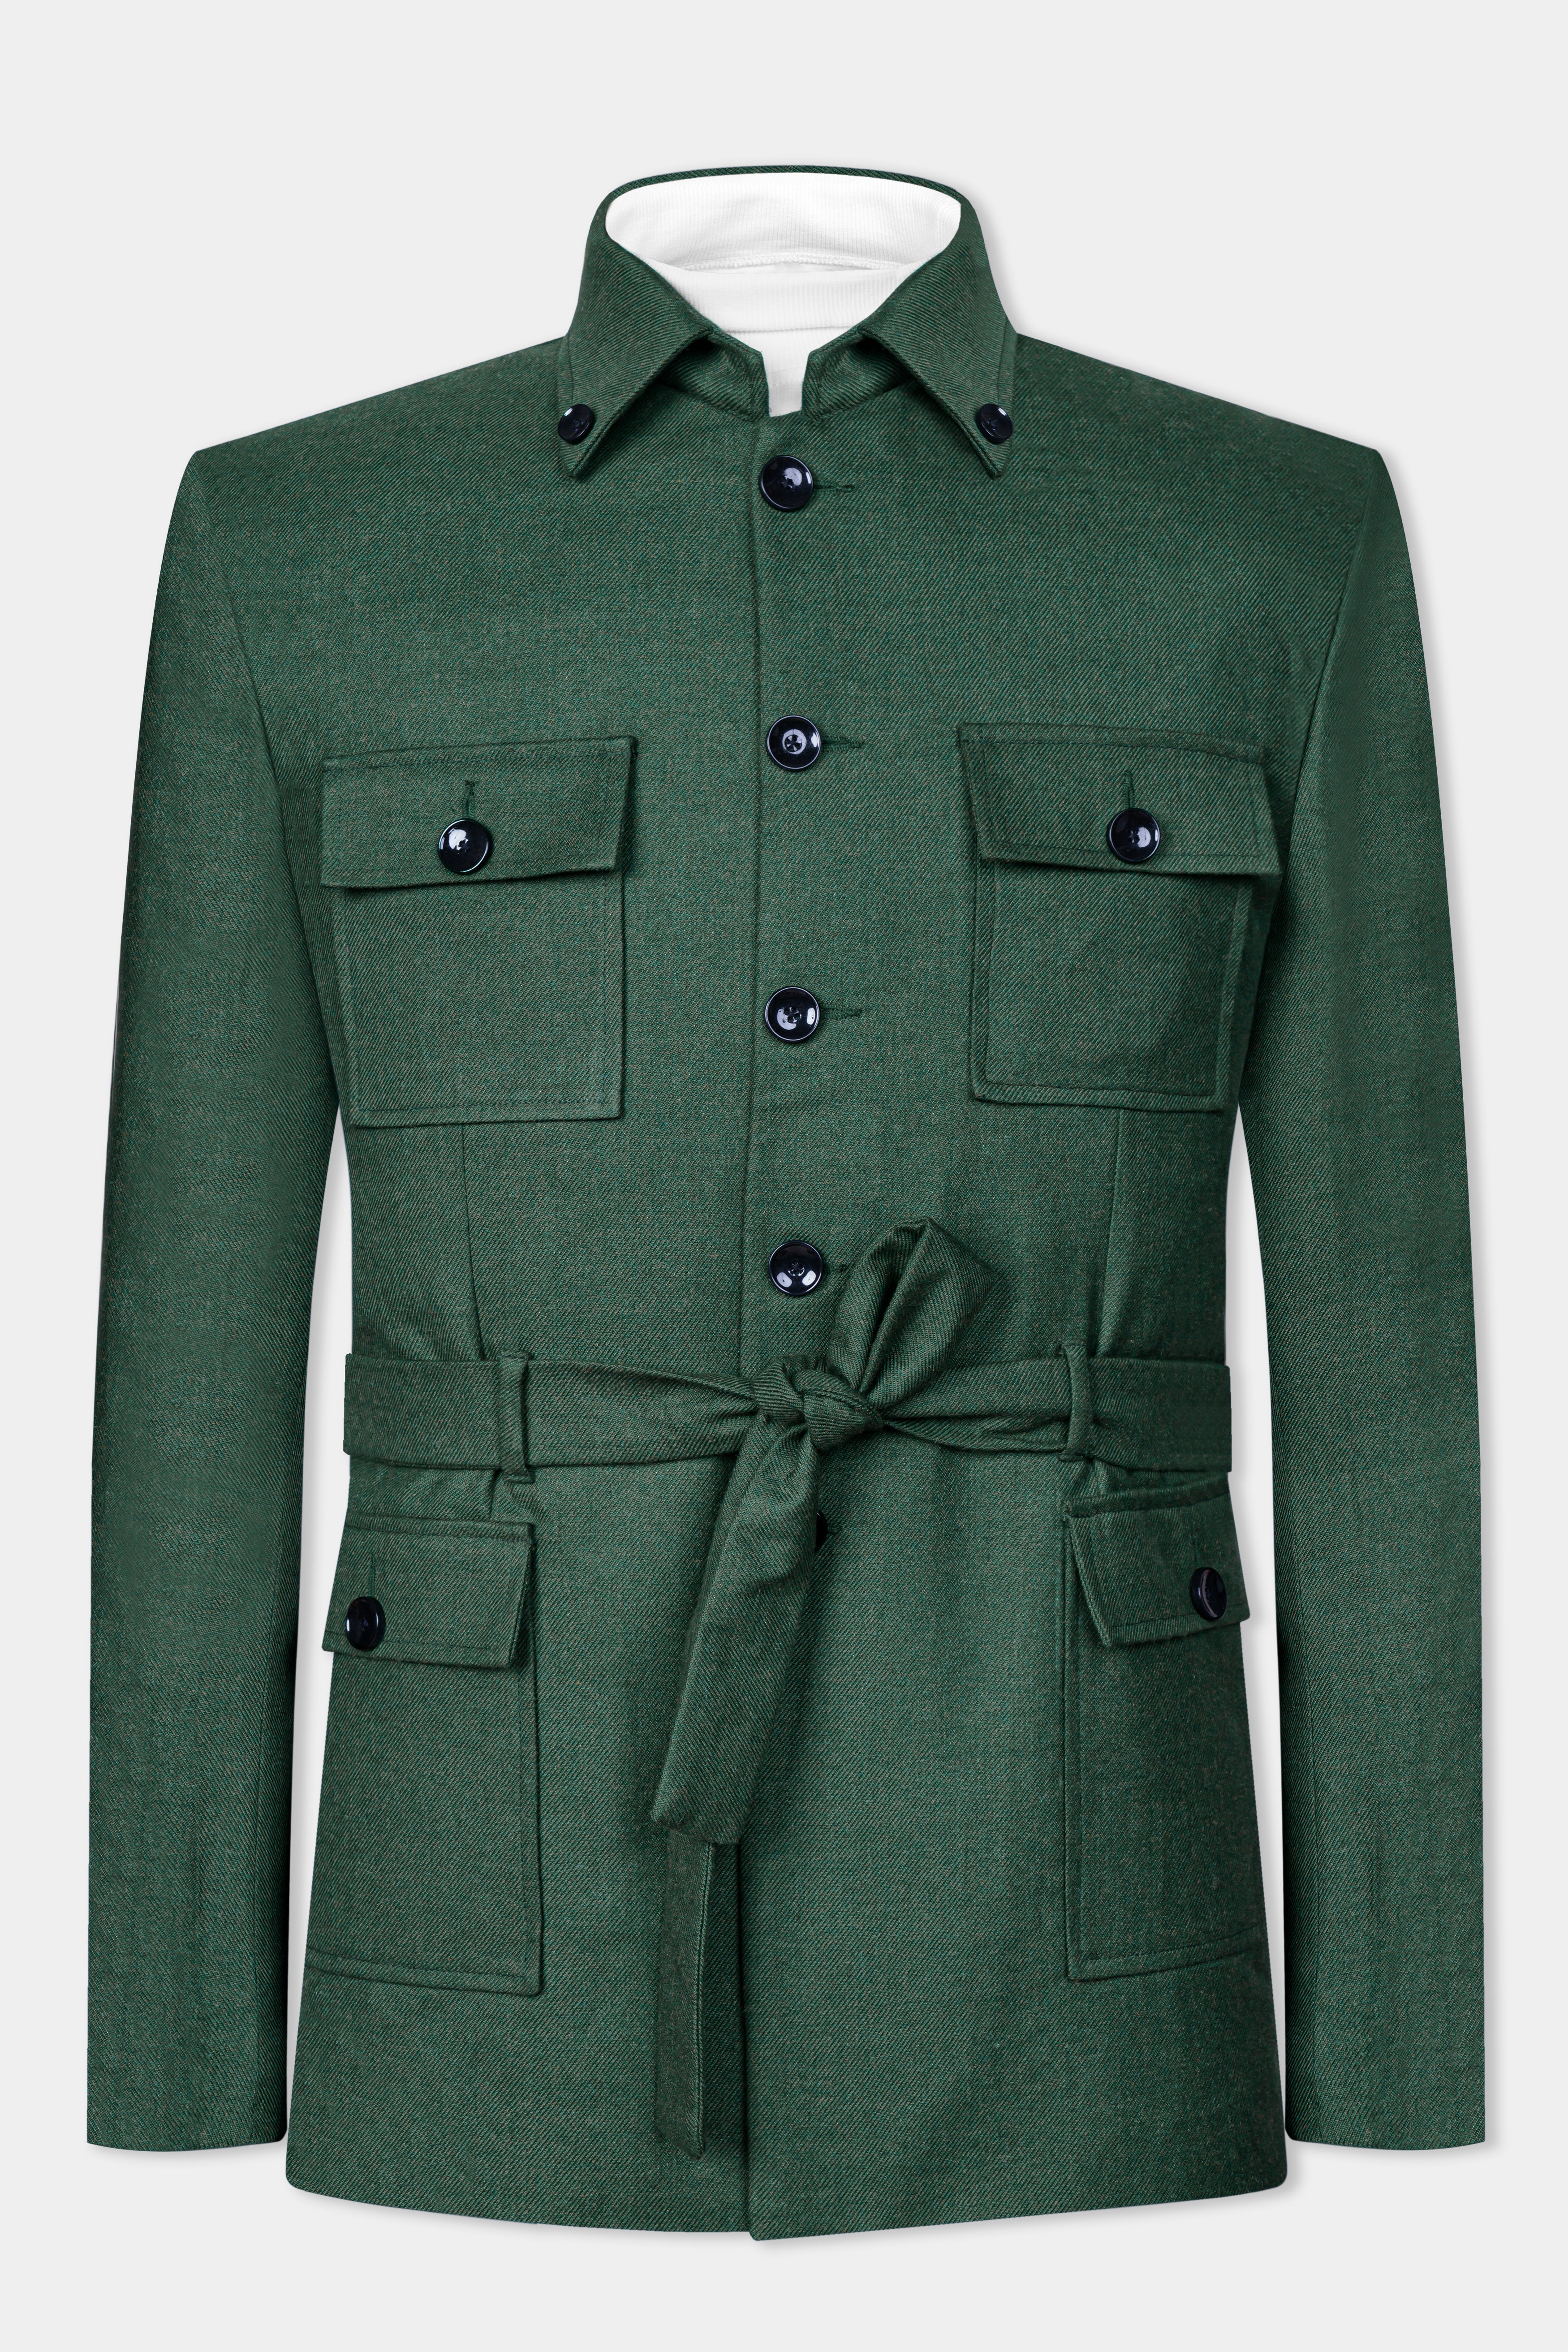 Plantation Green Tweed Designer Jacket Blazer With Functional Belt Fastening